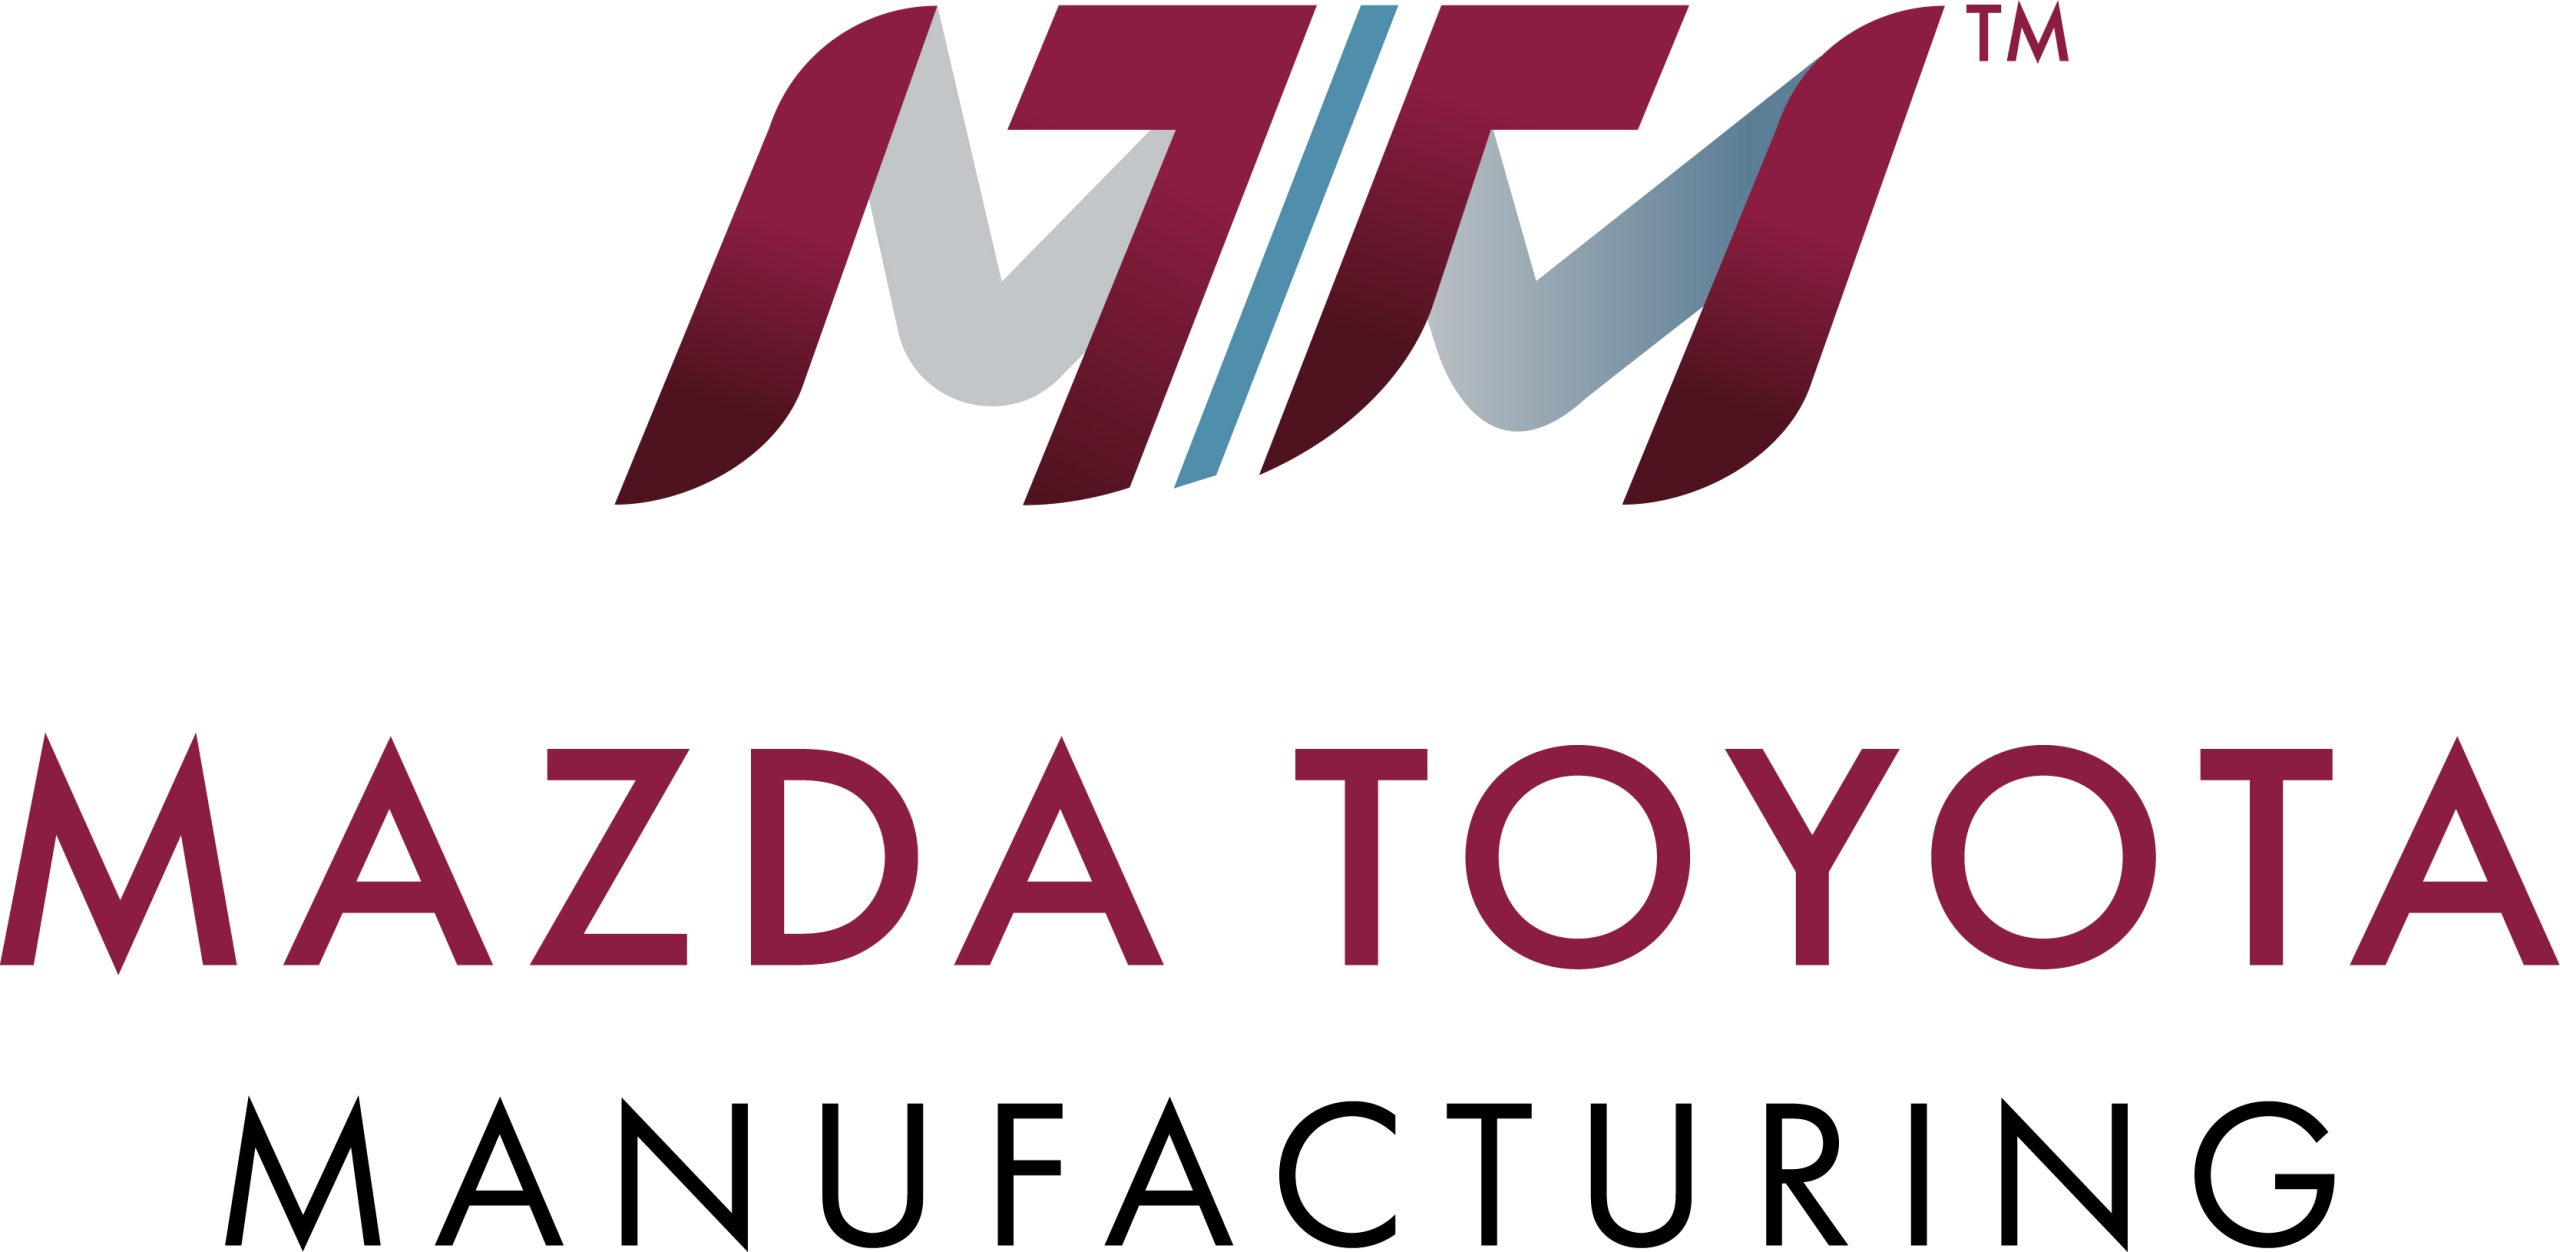 Production Team Member job at Mazda Toyota Manufacturing, U.S.A.